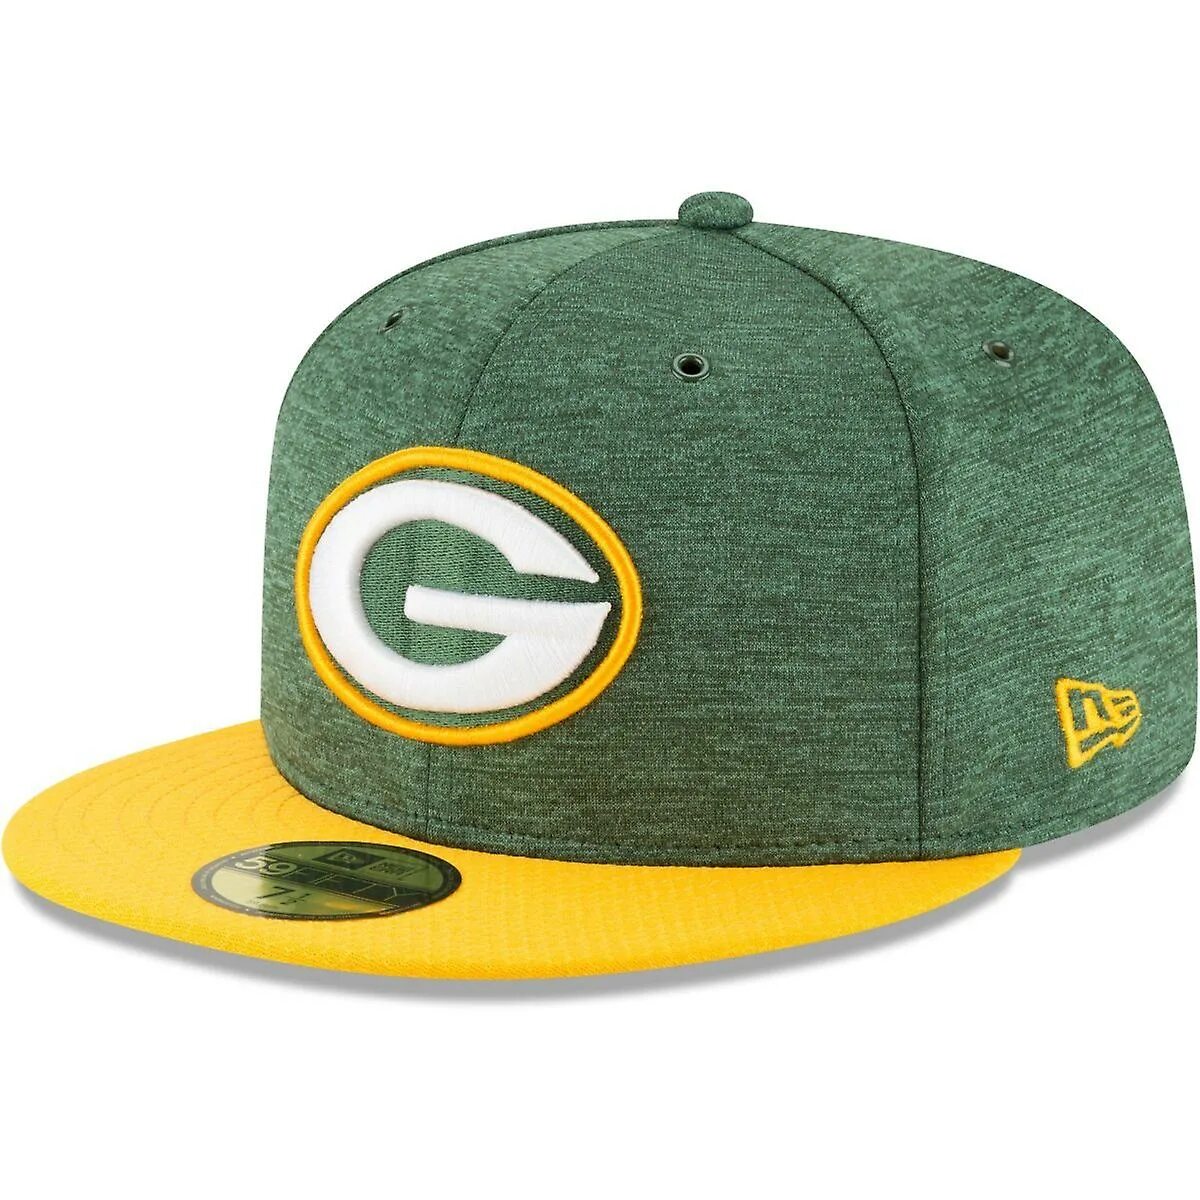 Бейсболки New era Snapback зеленая. New era p cap Green. Duo Snapback cap 18. Green Bay Packers шапка.